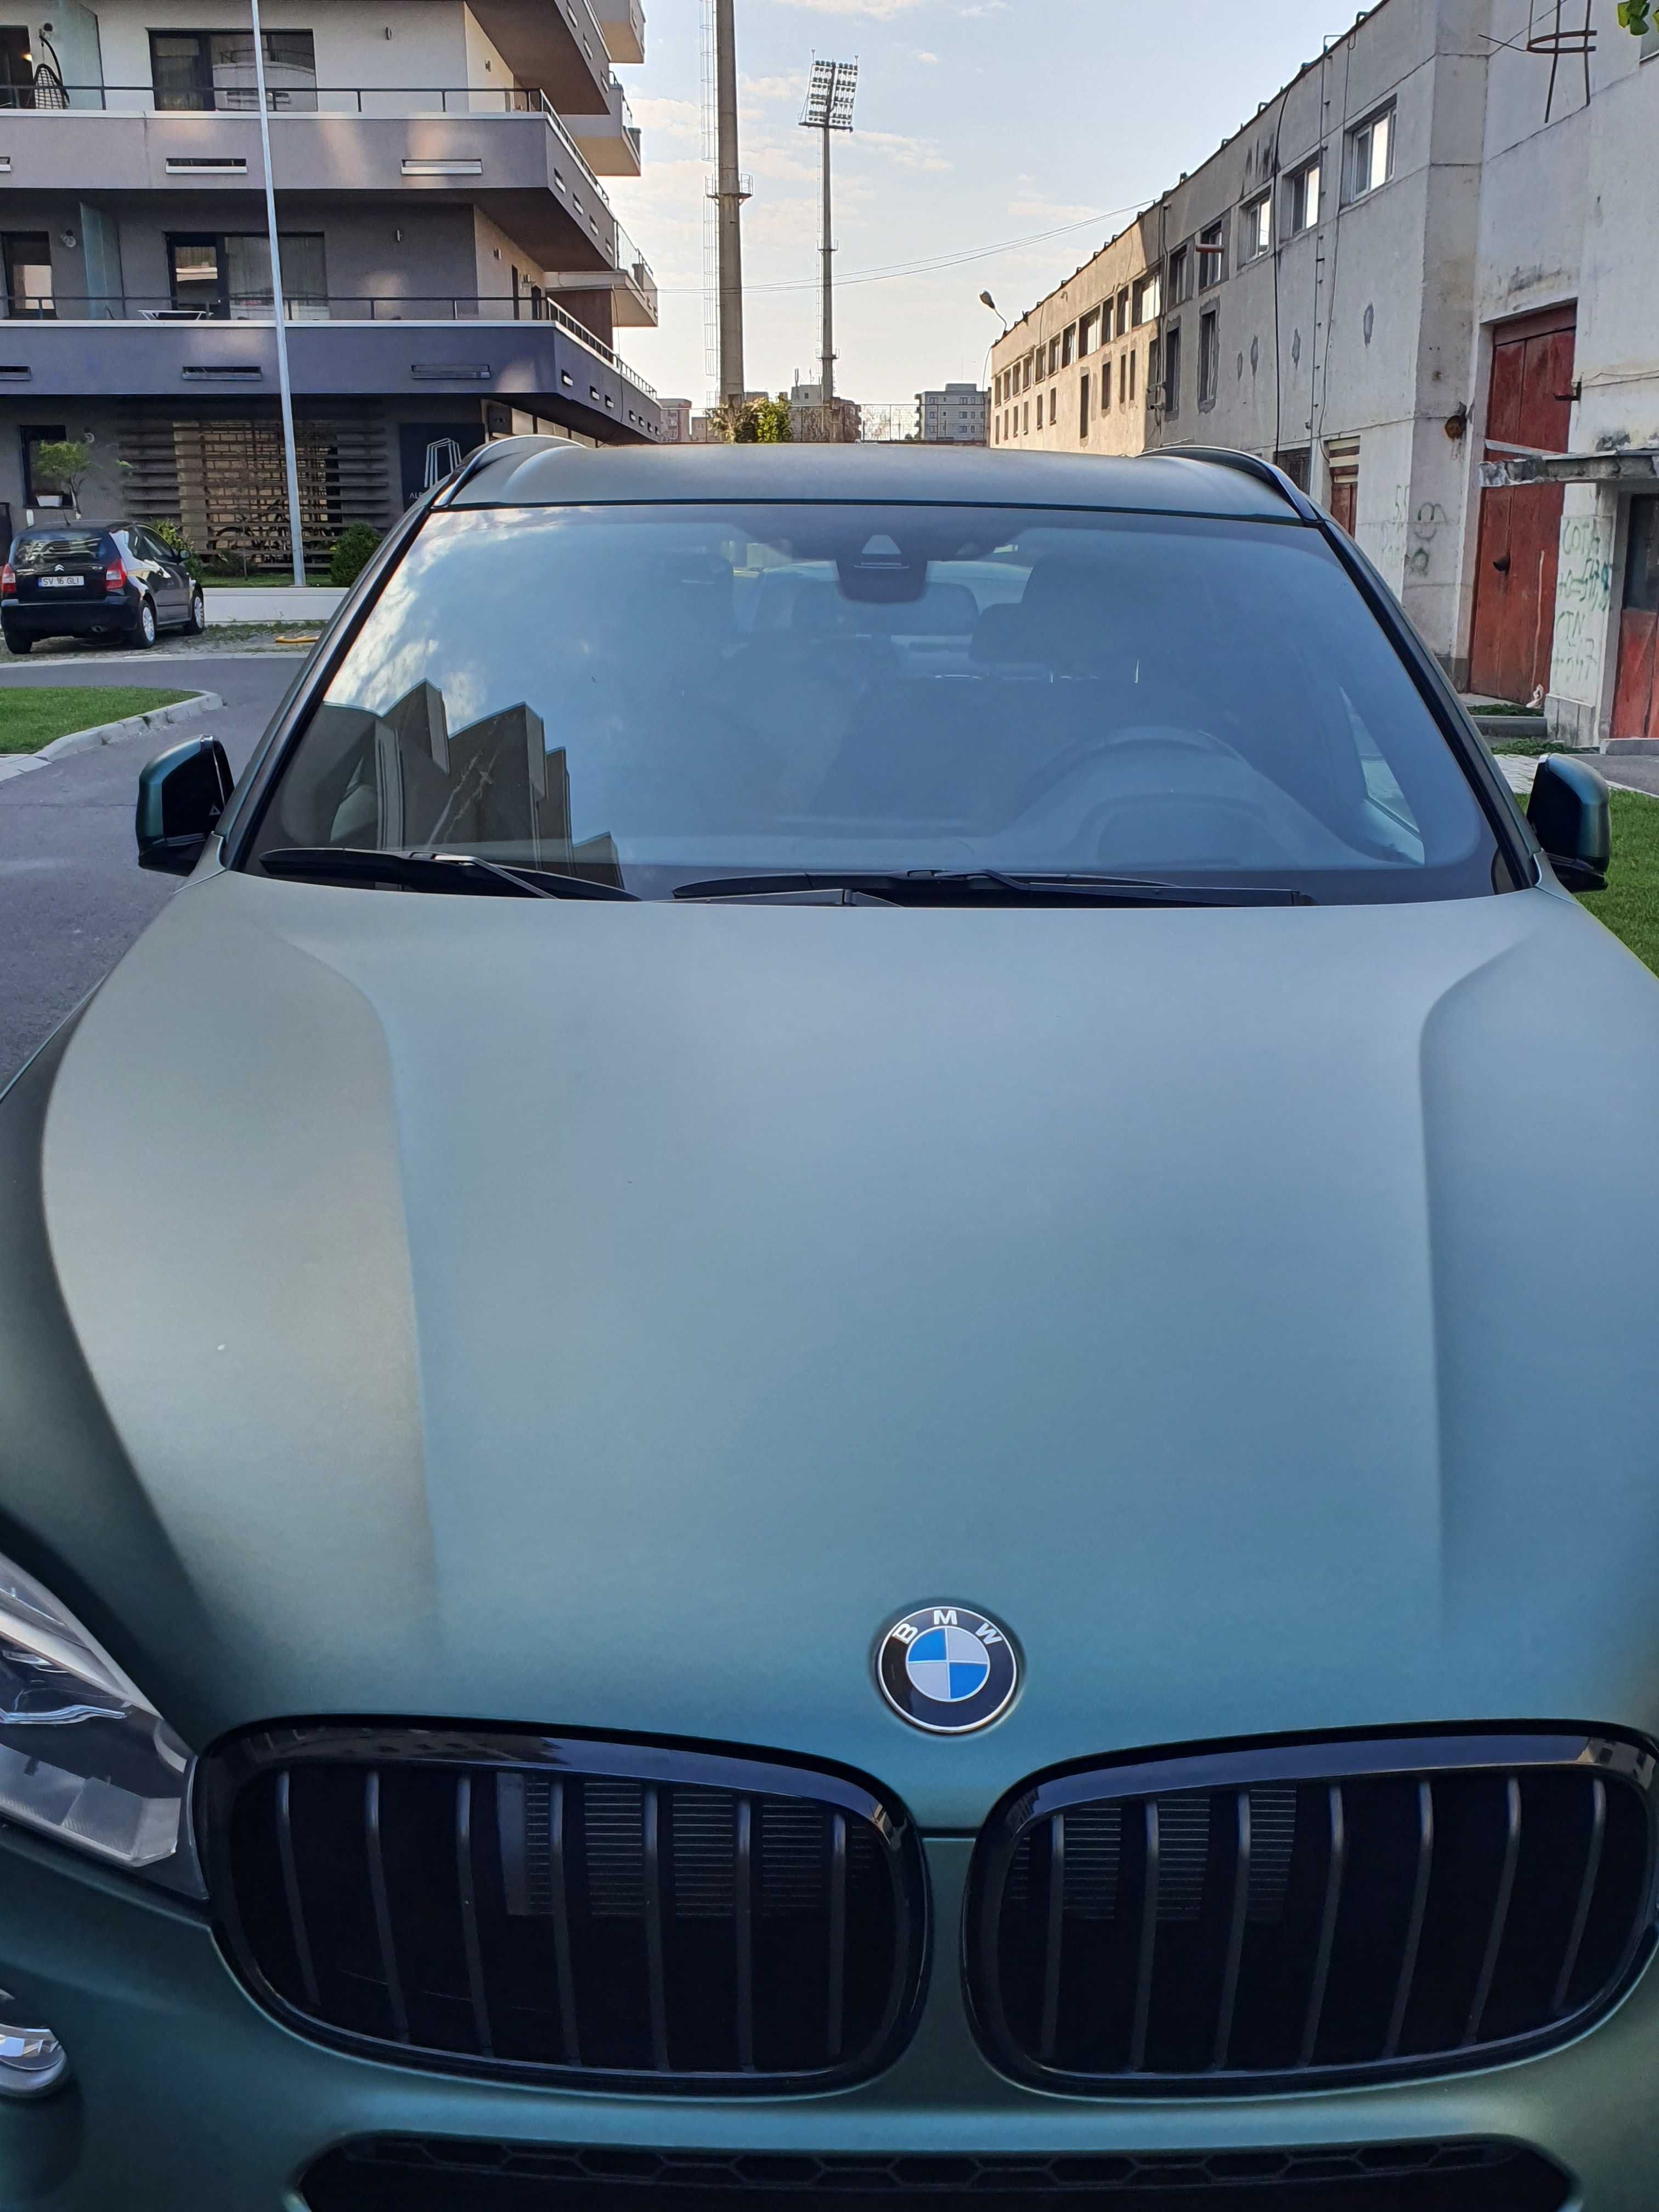 BMW X5 M50D 2017